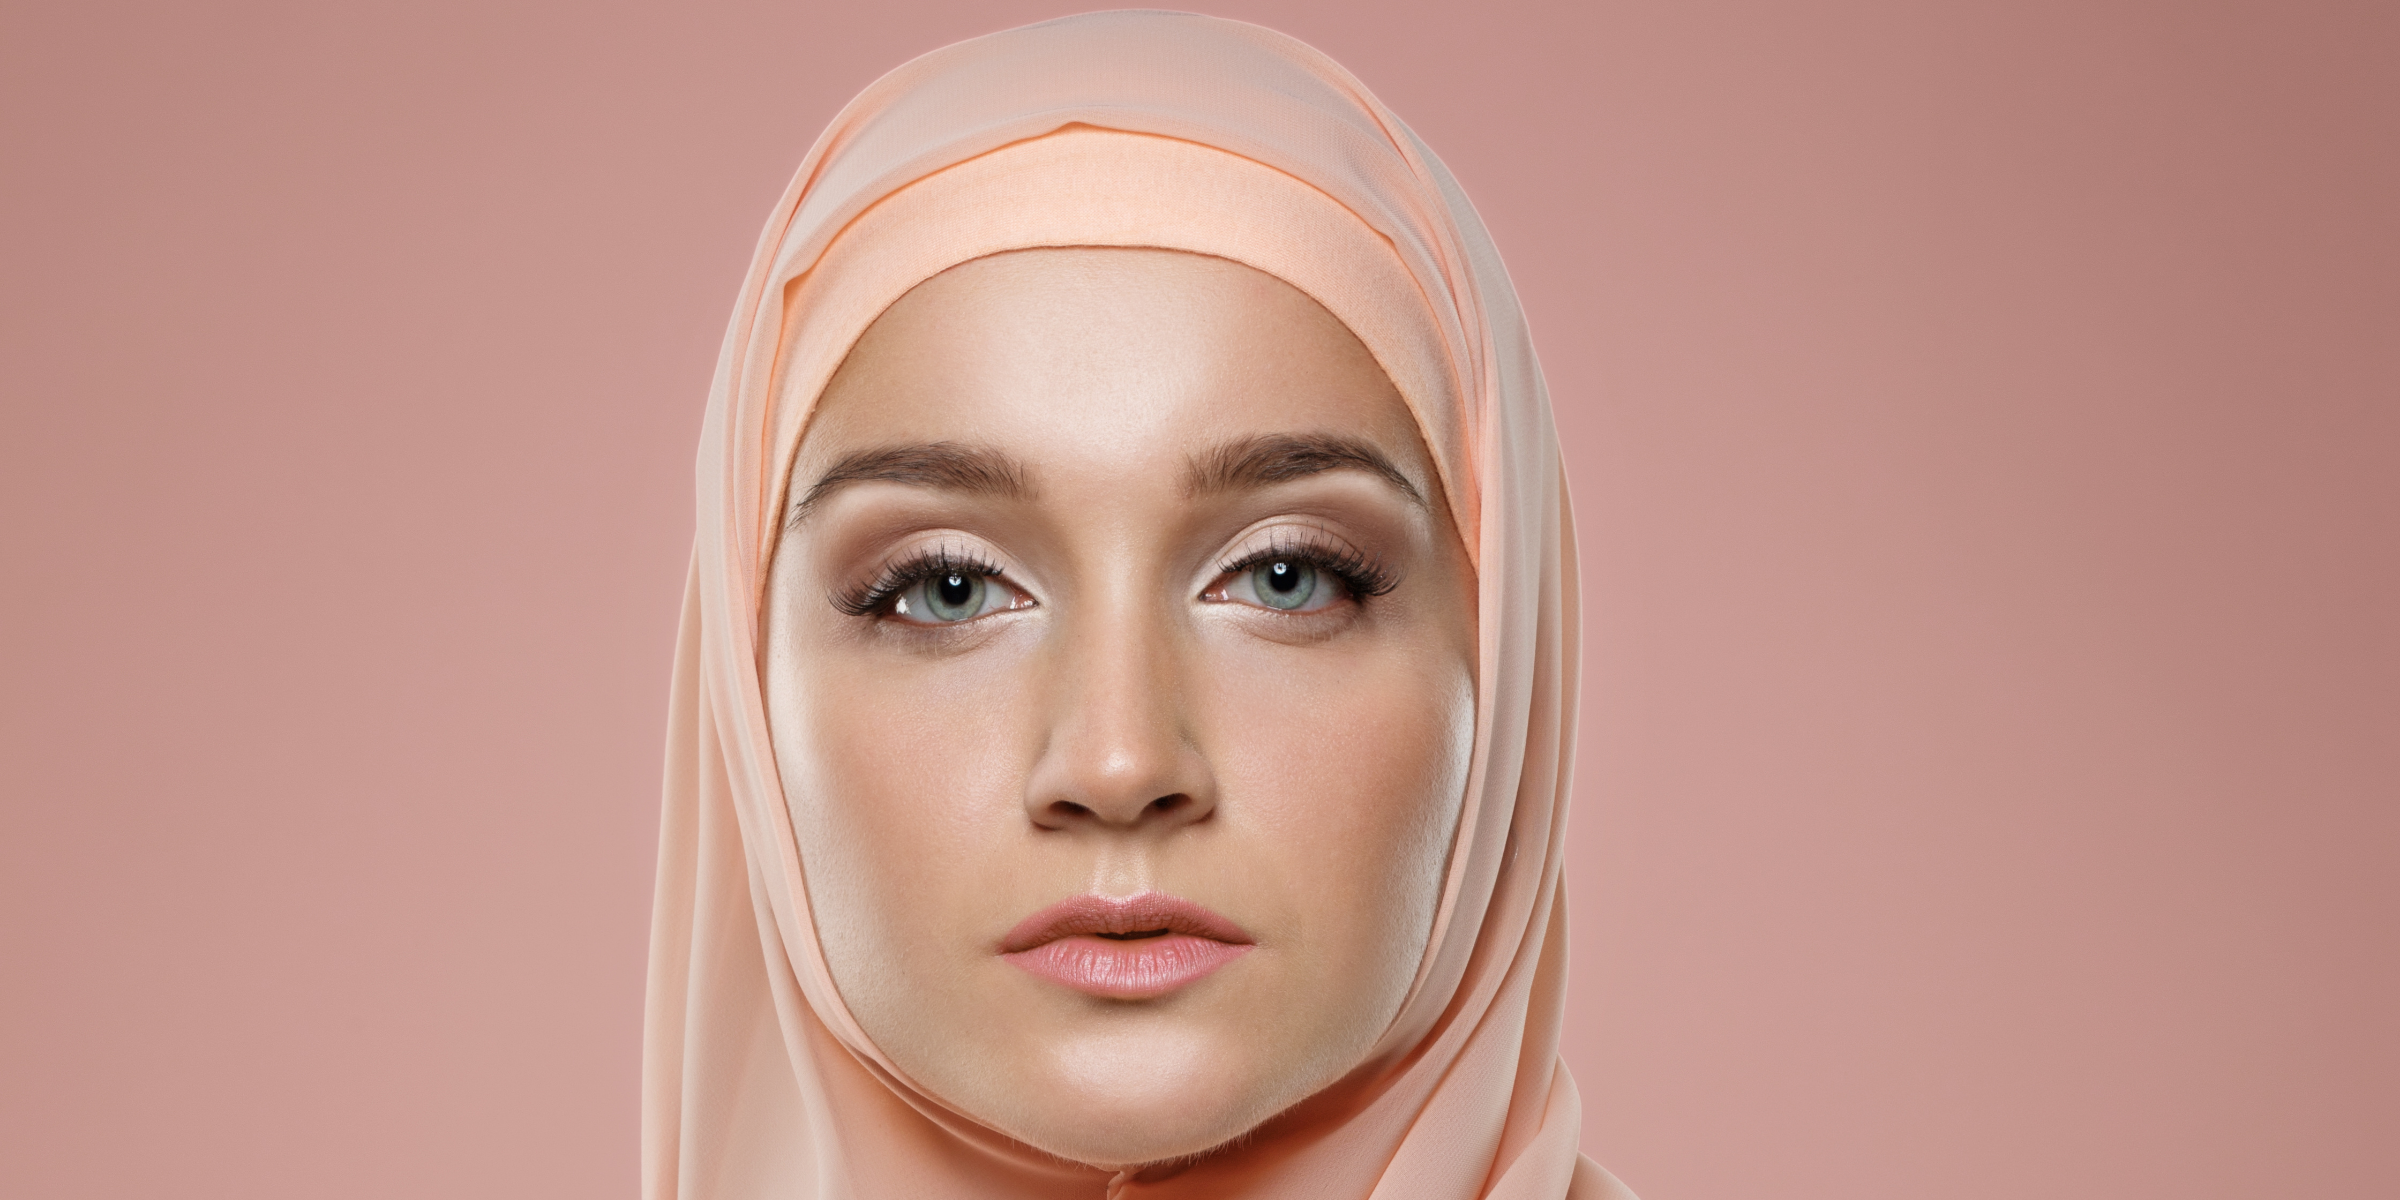 sujada-modest-fashion-islamic-men-women-4